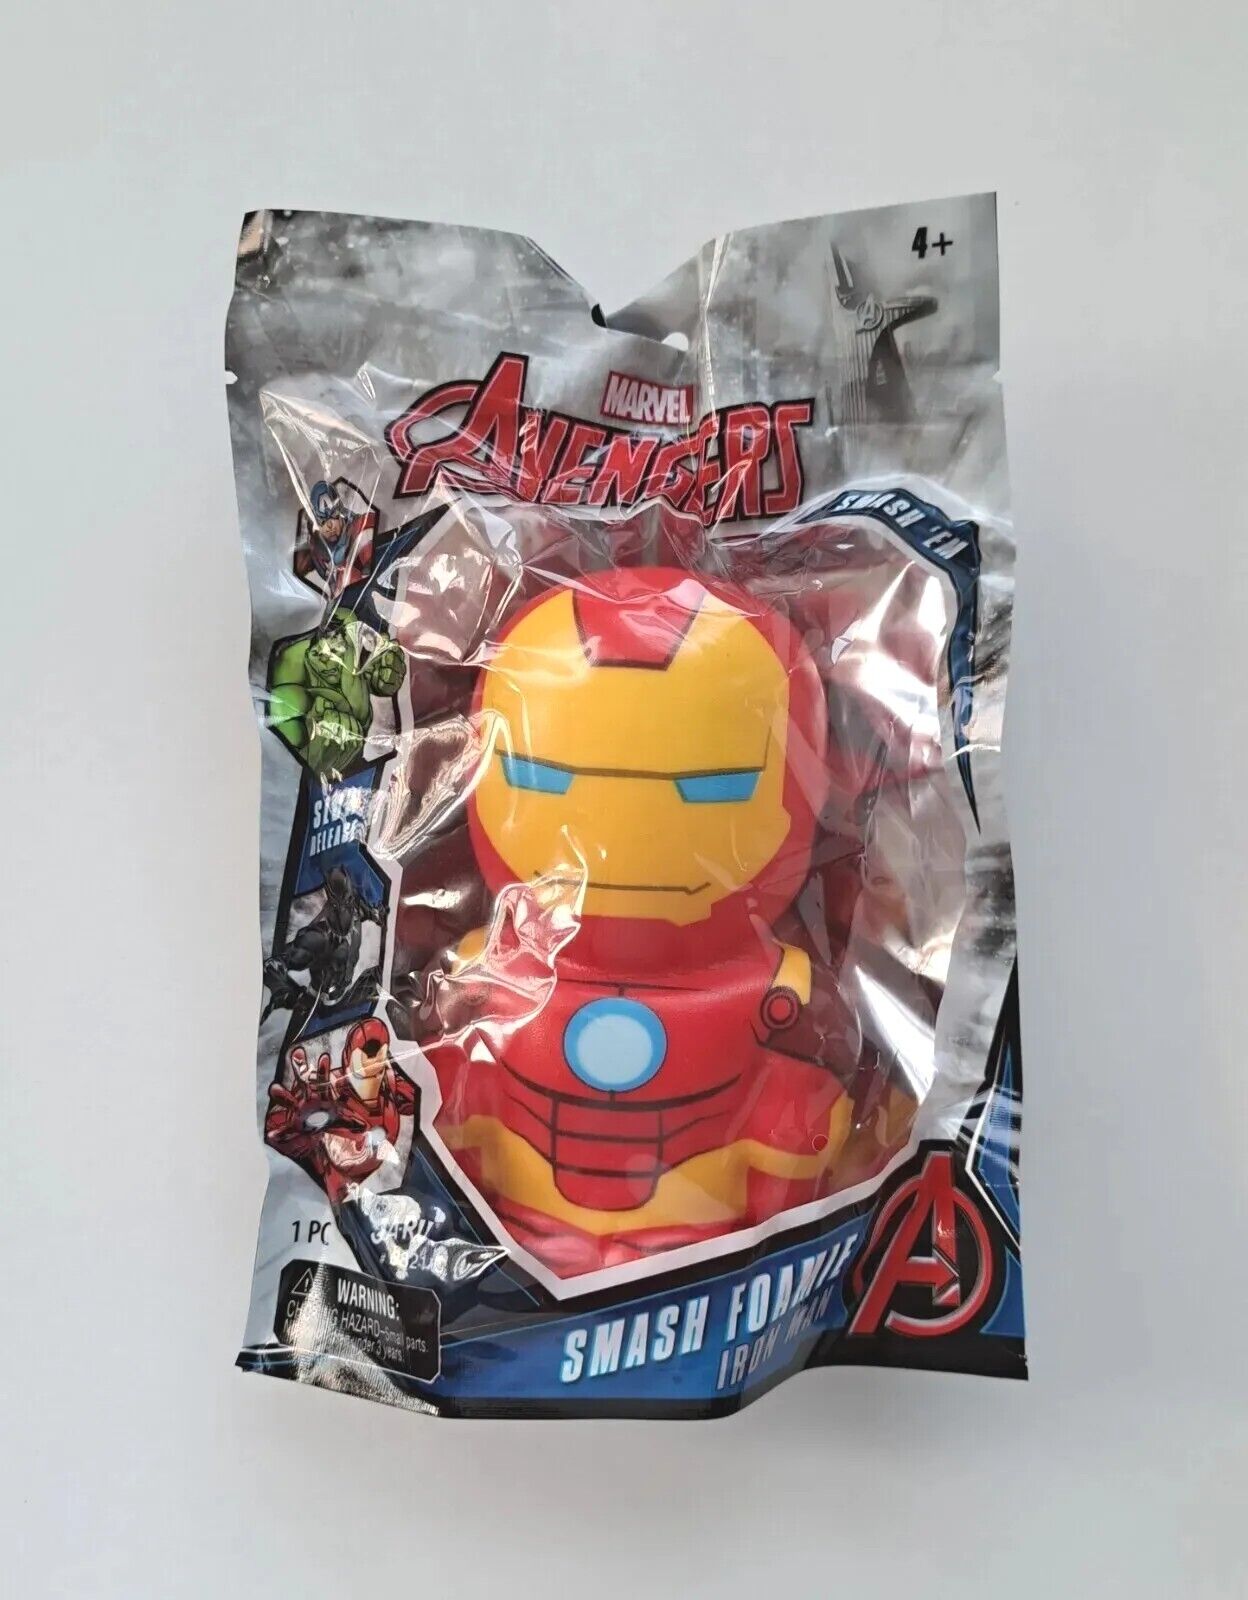 Marvel Avengers - Iron Man Smash Foamie Slow Release Foam Toy Collectible Figure